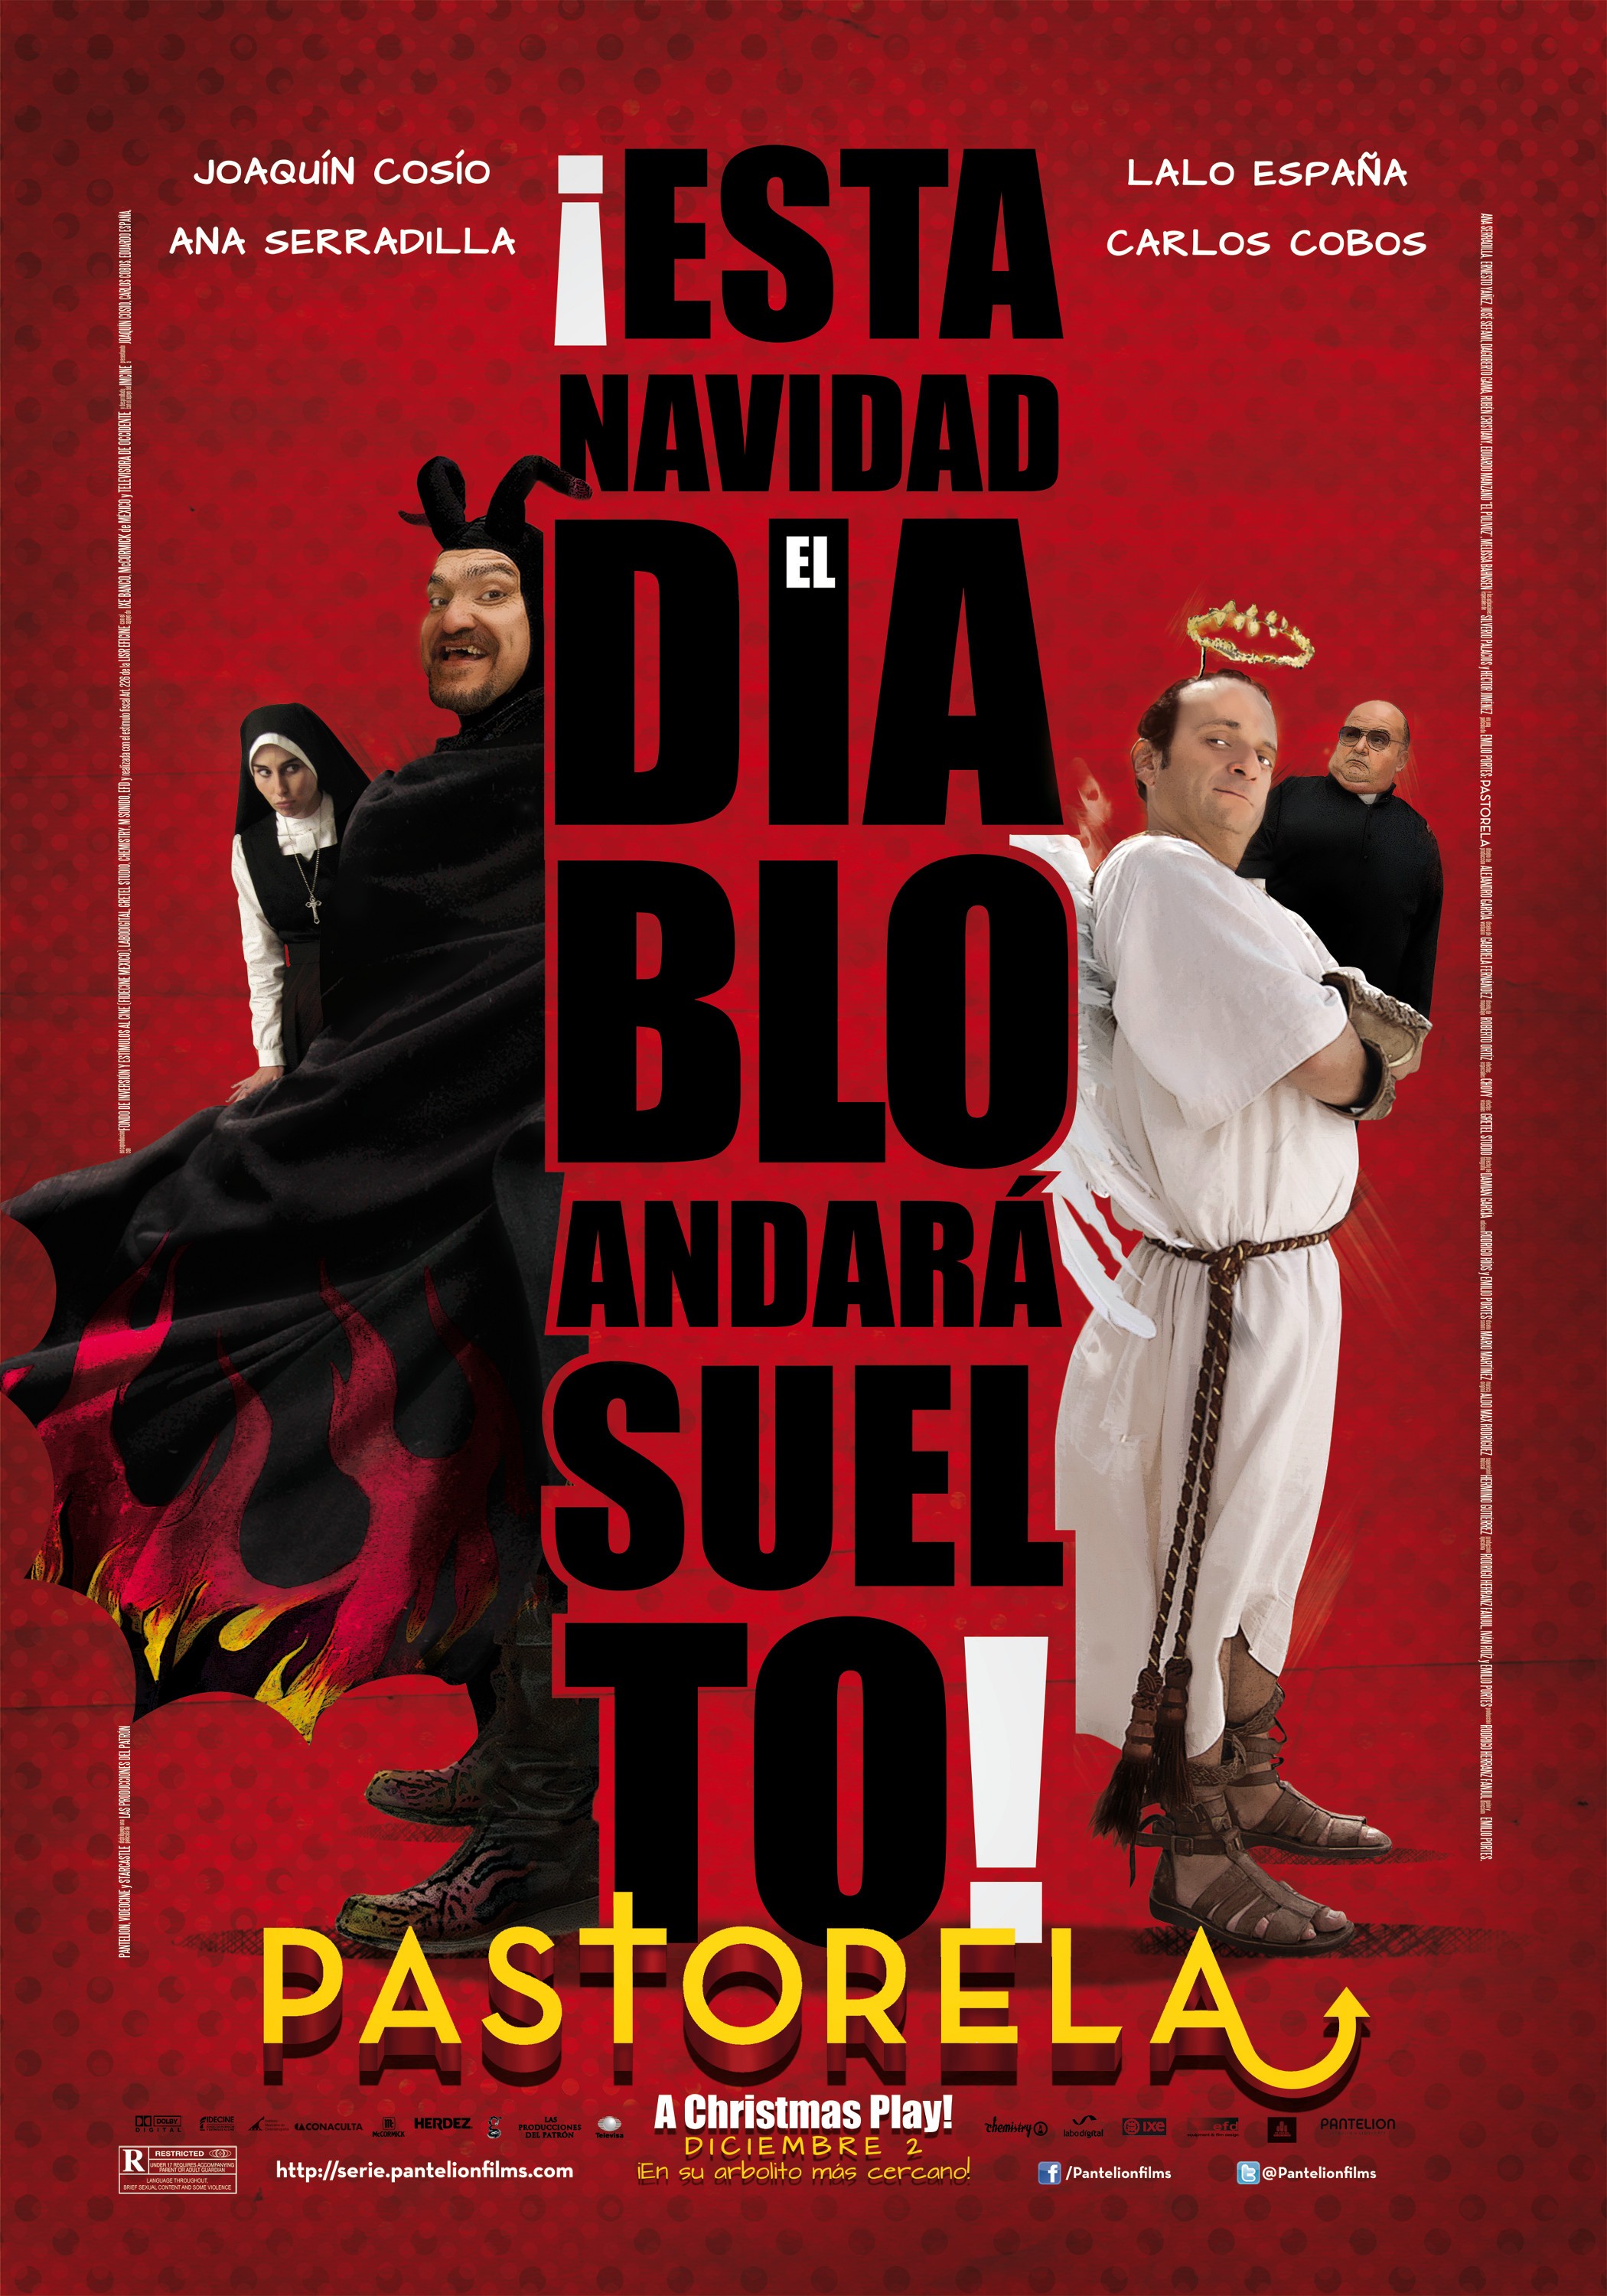 Mega Sized Movie Poster Image for Pastorela (#2 of 2)